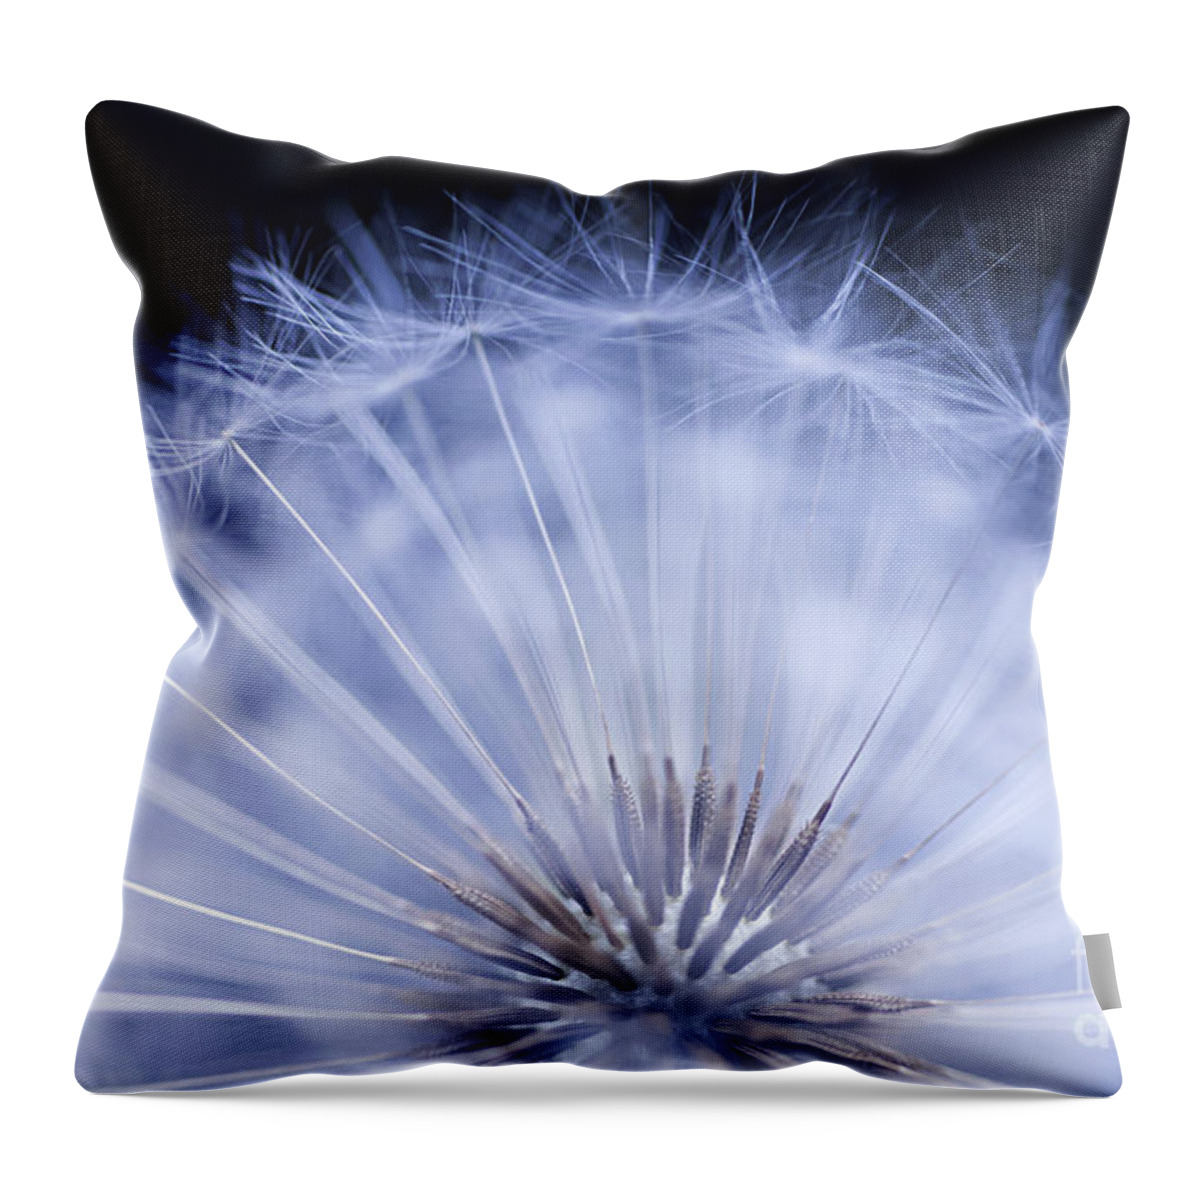 Dandelion Throw Pillow featuring the photograph Dandelion rising by Elena Elisseeva